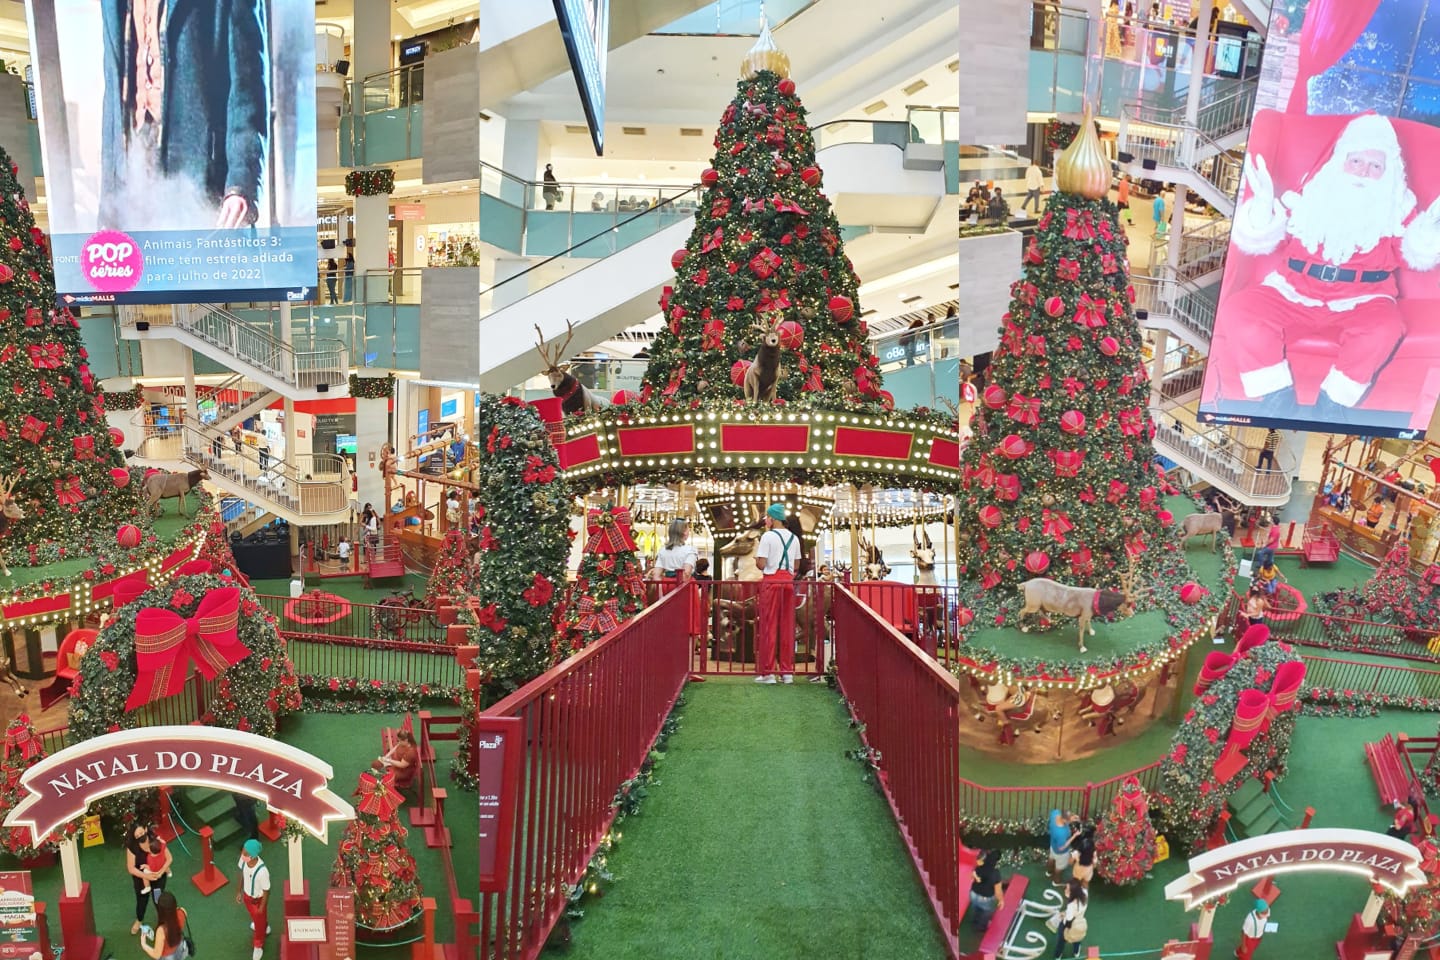 Plaza Shopping Niterói apresenta um Natal interativo